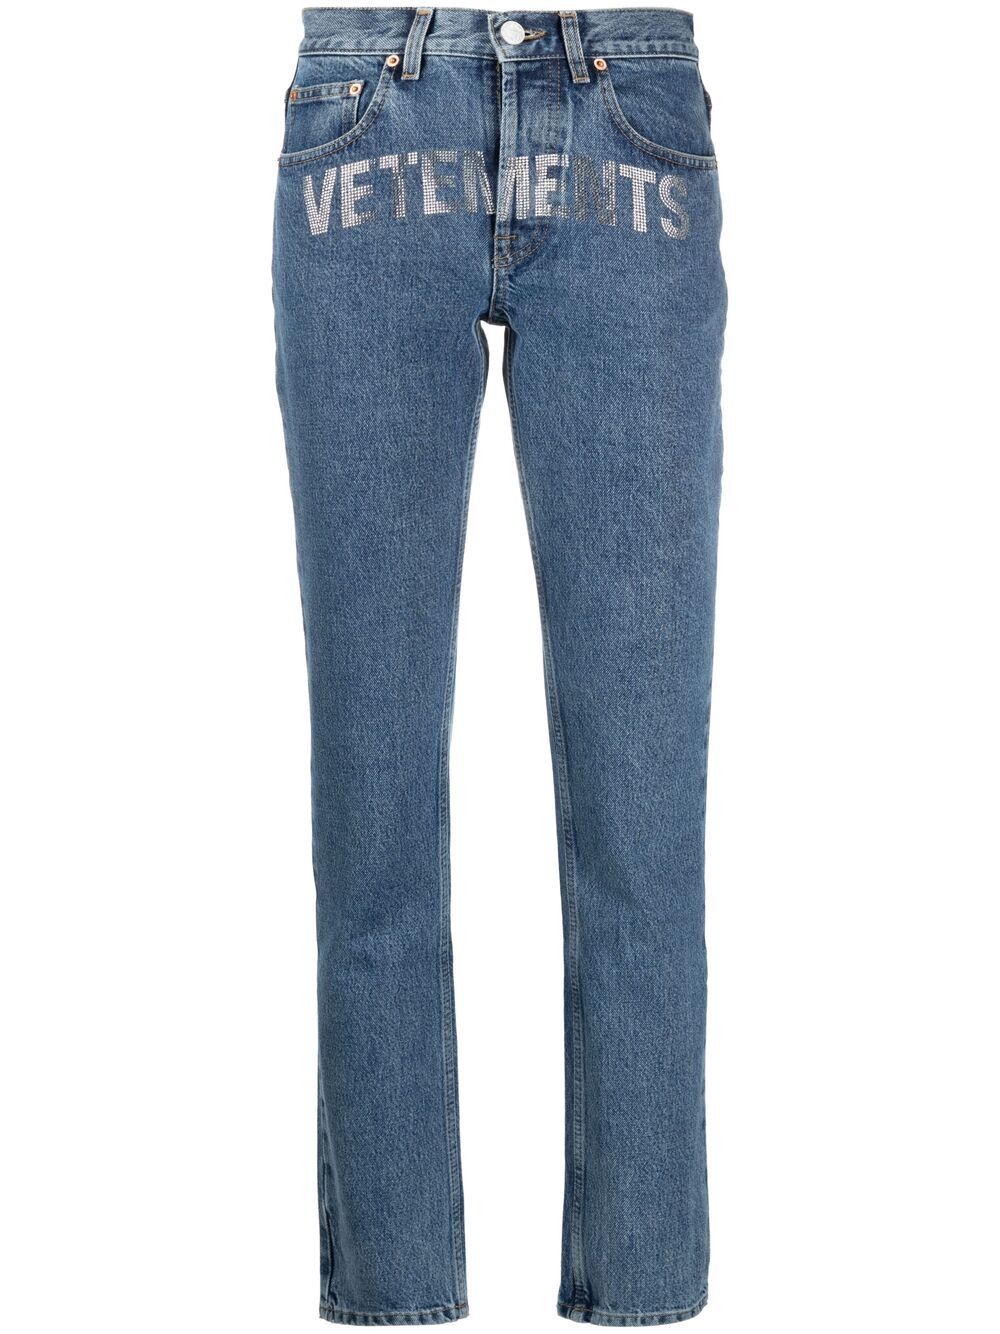 фото Vetements джинсы с логотипом